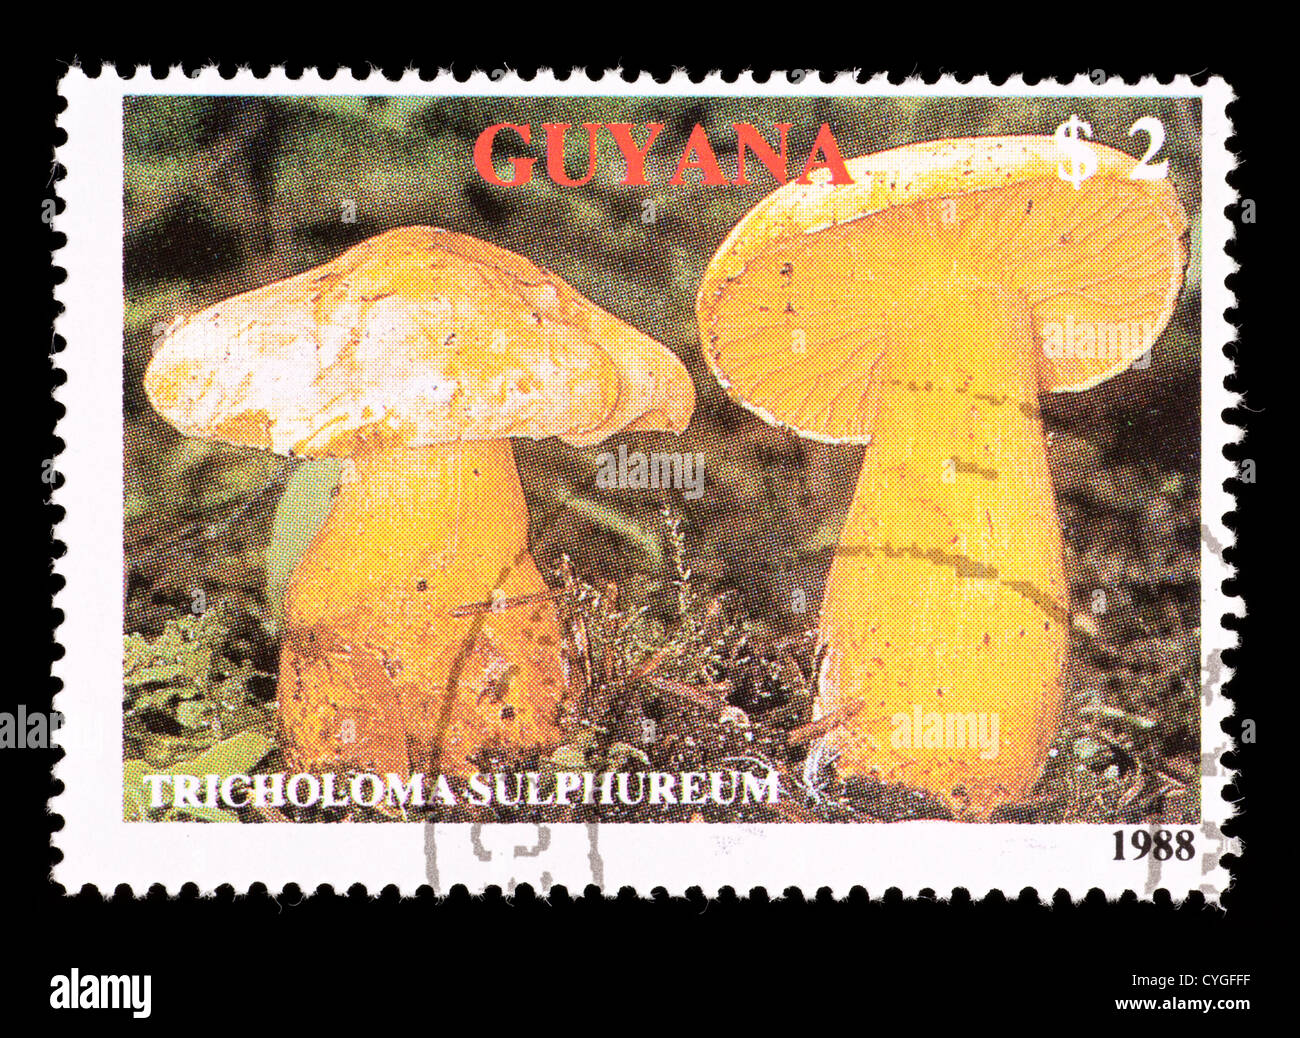 Postage stamp from Guyana depicting mushrooms (Tricholoma sulphureum) Stock Photo